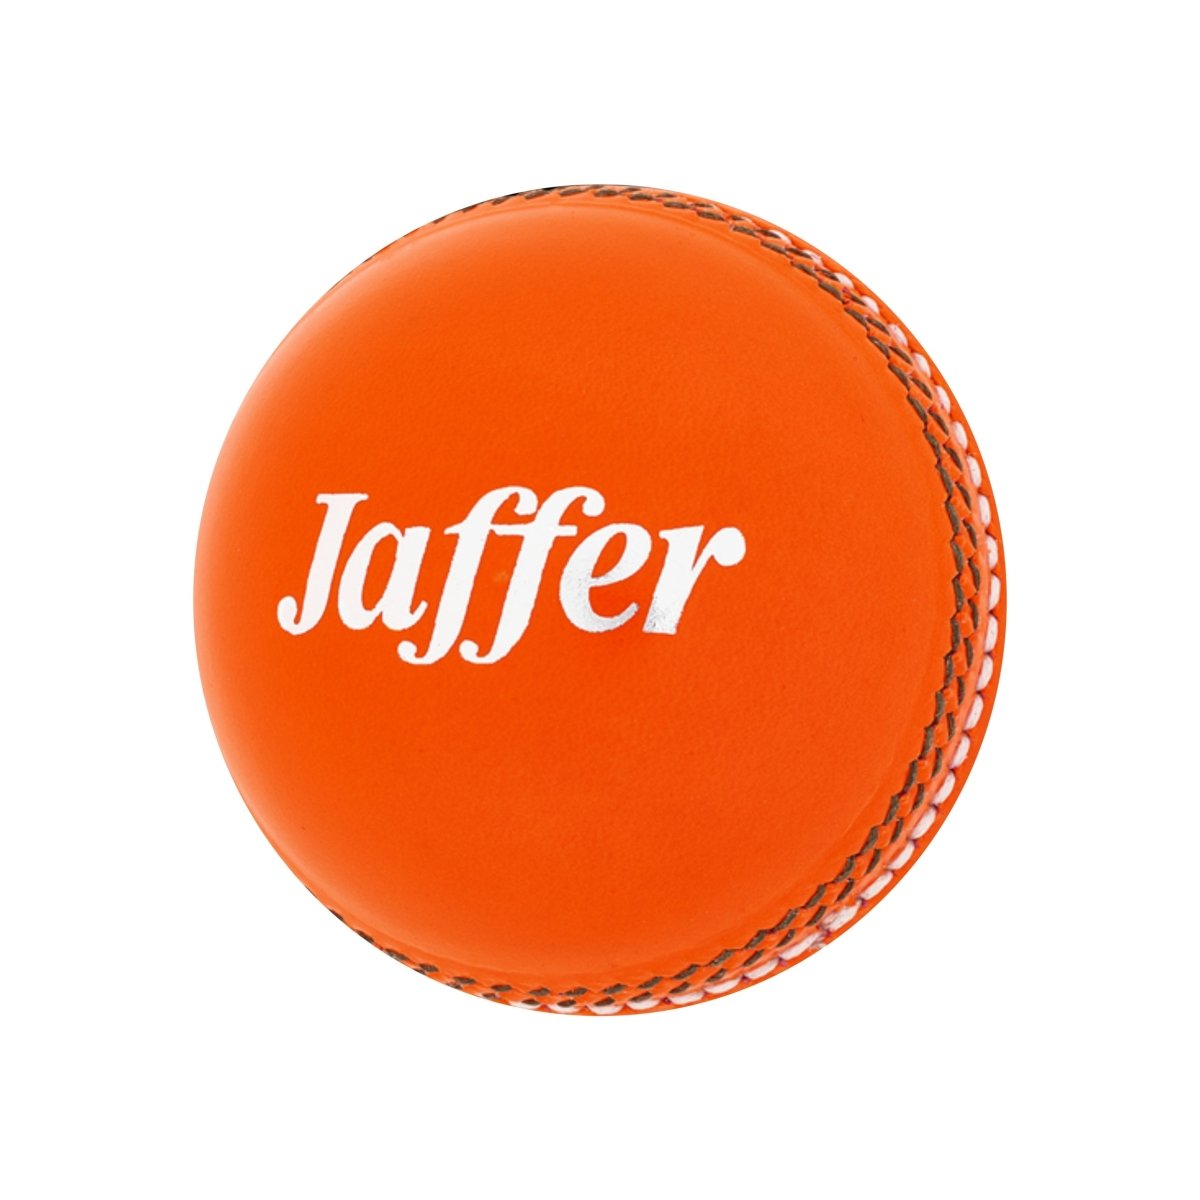 Kookaburra Jaffer Cricket Ball